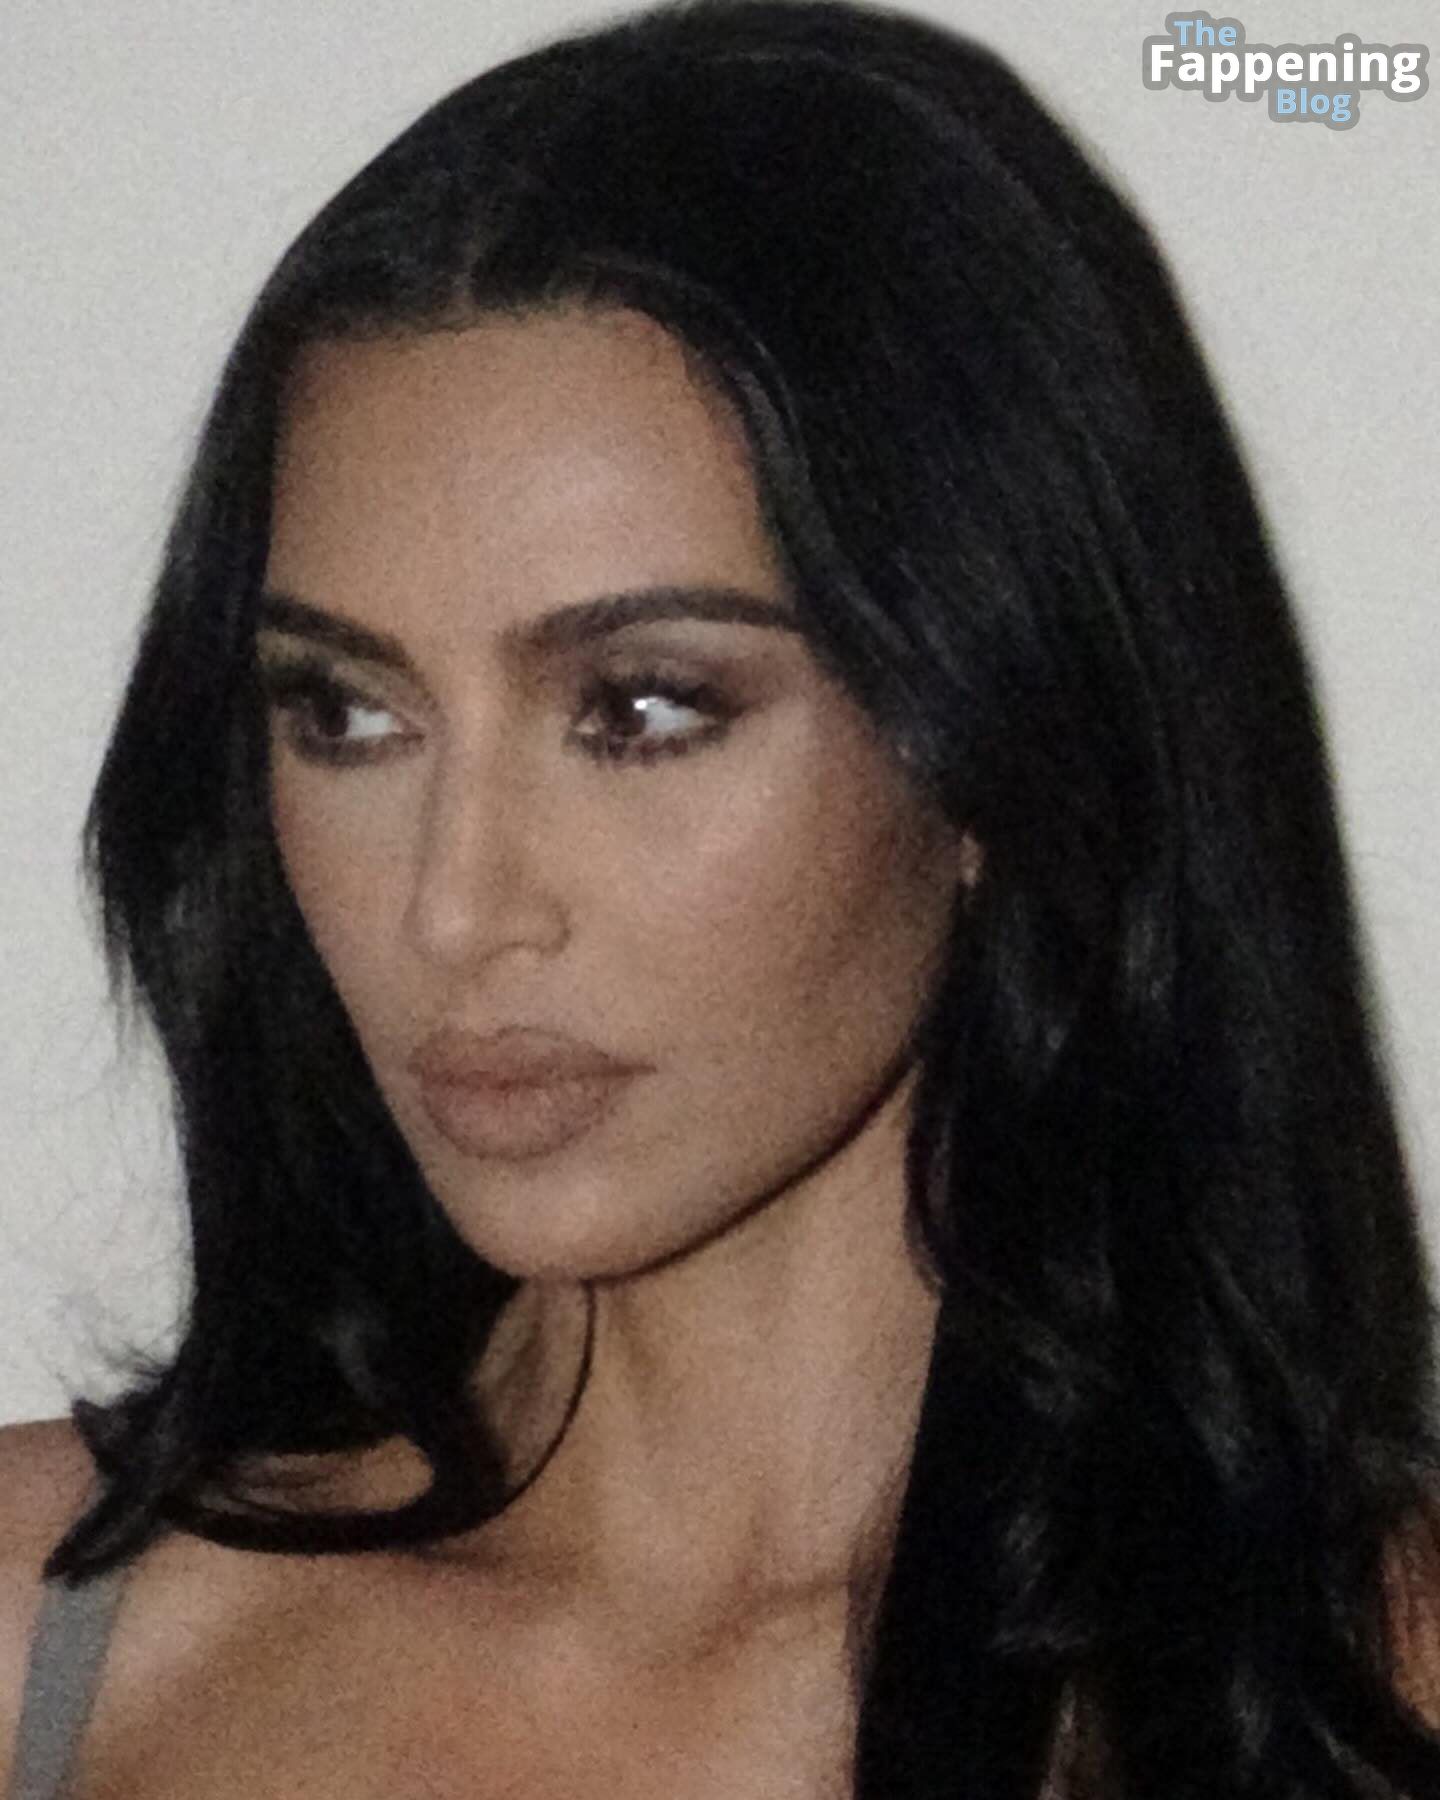 Kim Kardashian Looks Hot in a New SKIMS Promo Shoot (13 Photos)